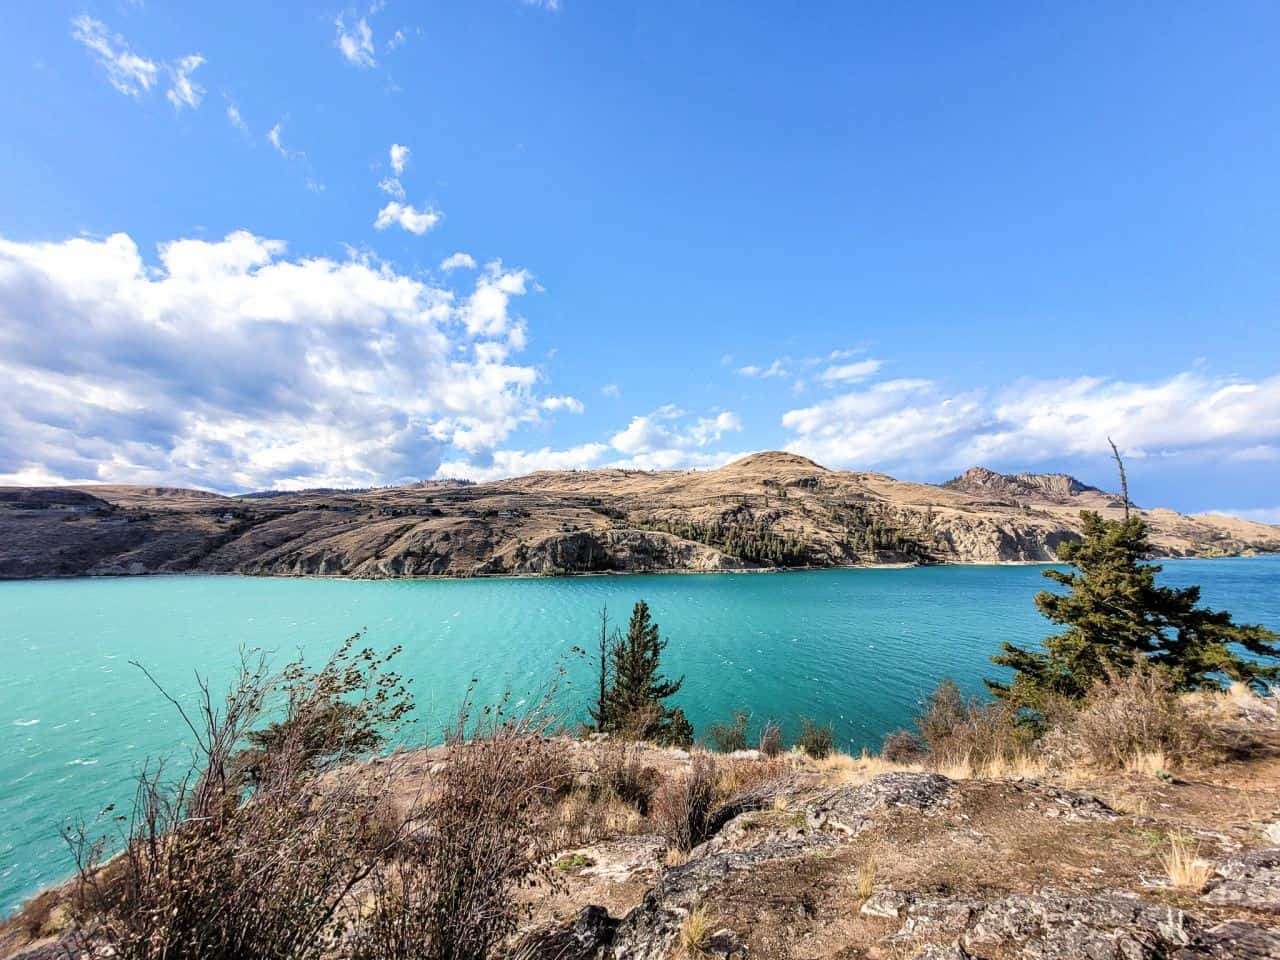 View of Kalamalka Lake and its turquoise water